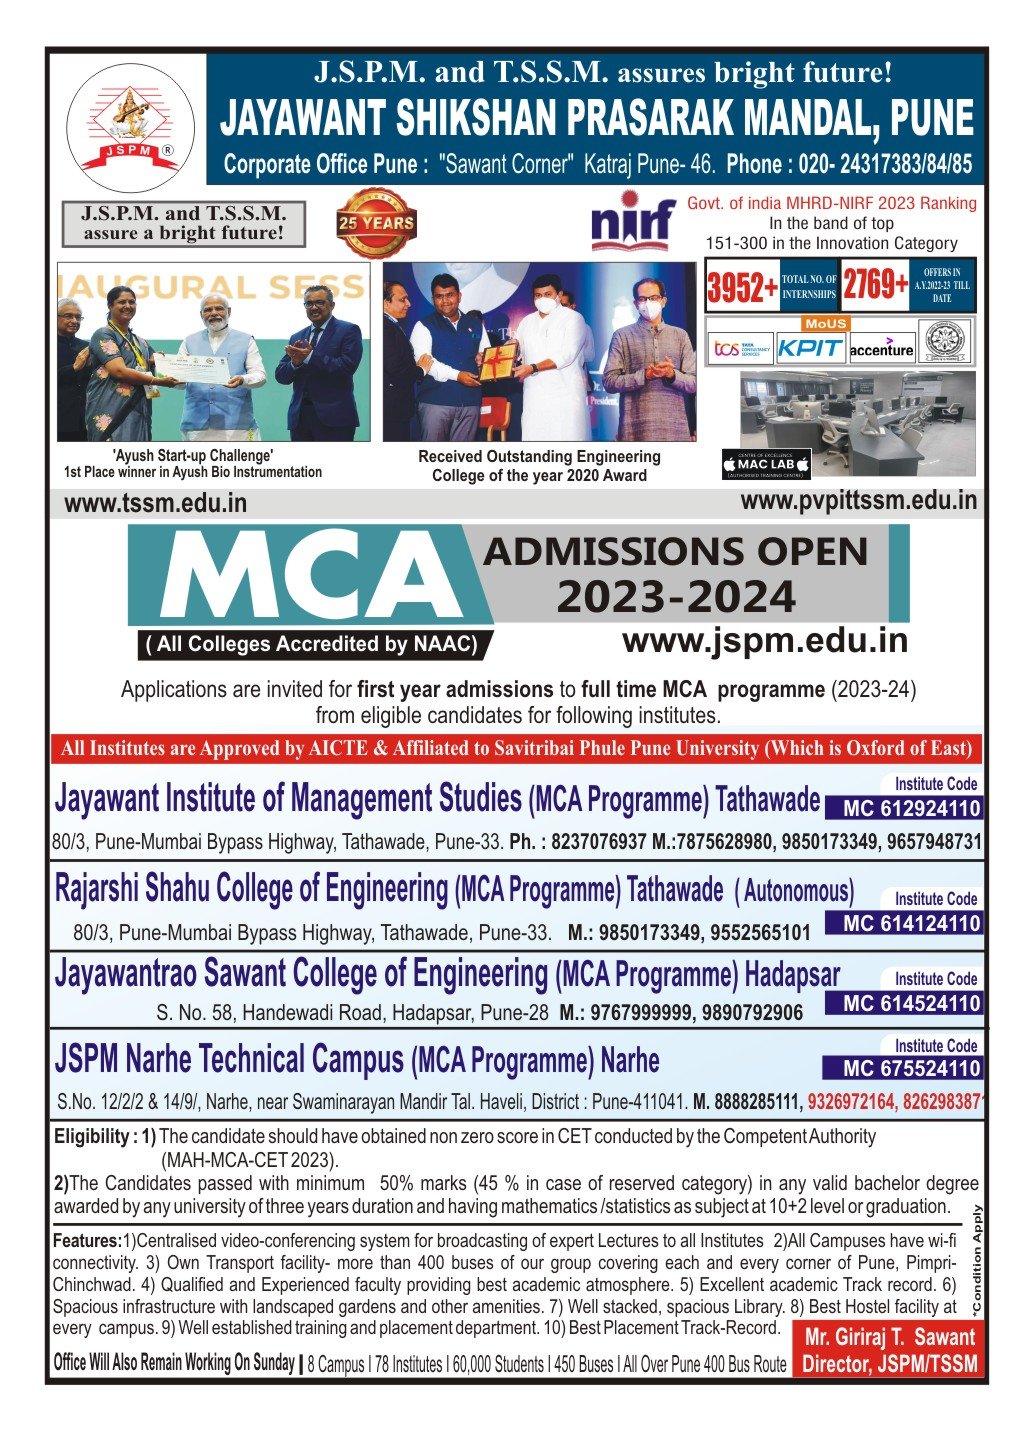 Admission Advertisement MCA